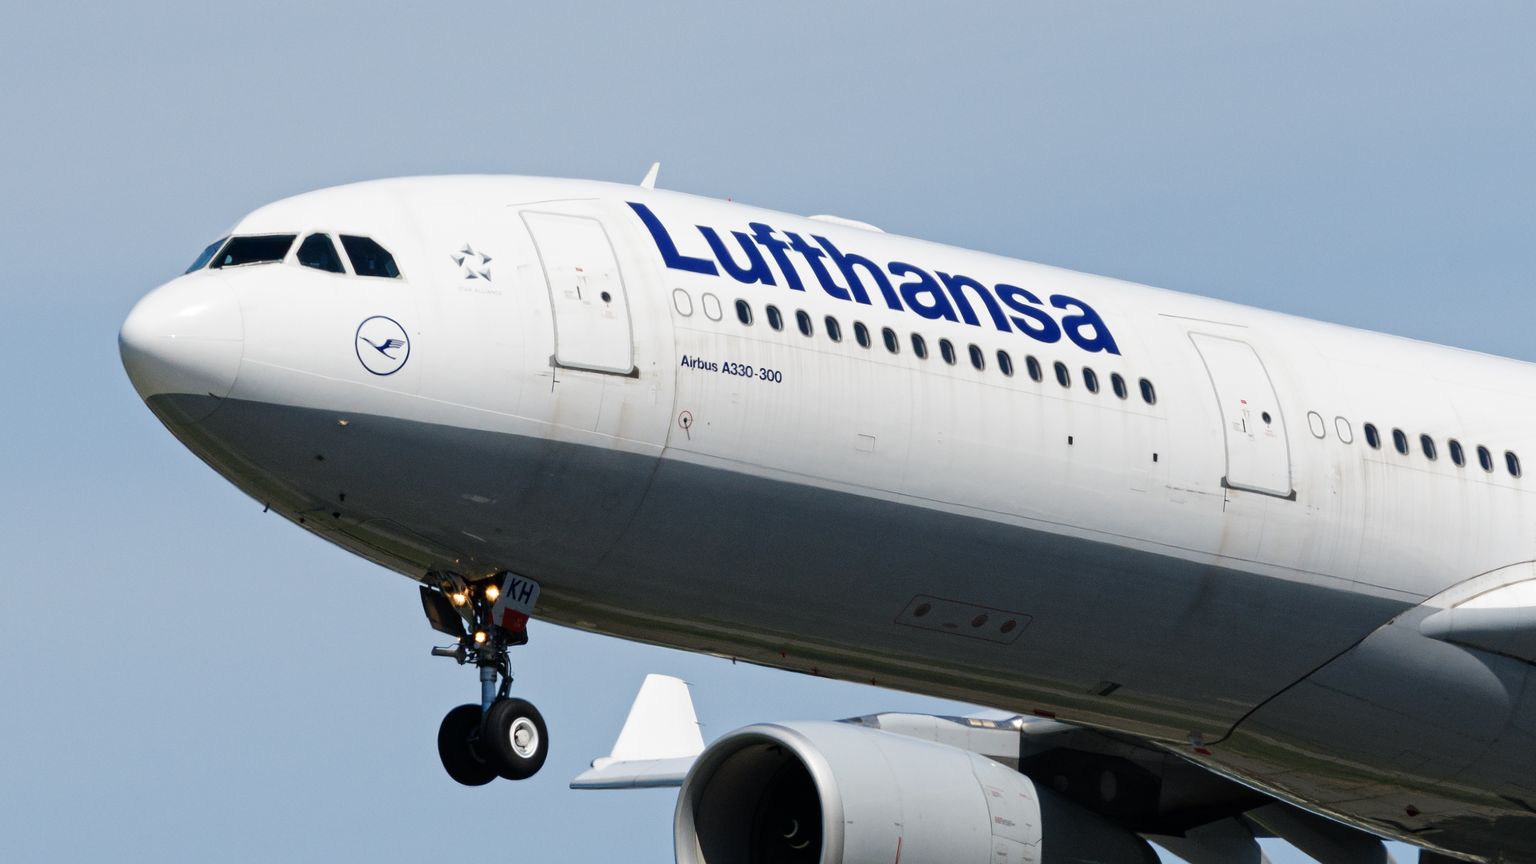 Lufthansa lennuk Airbus A330-300. Foto on illustratiivne.